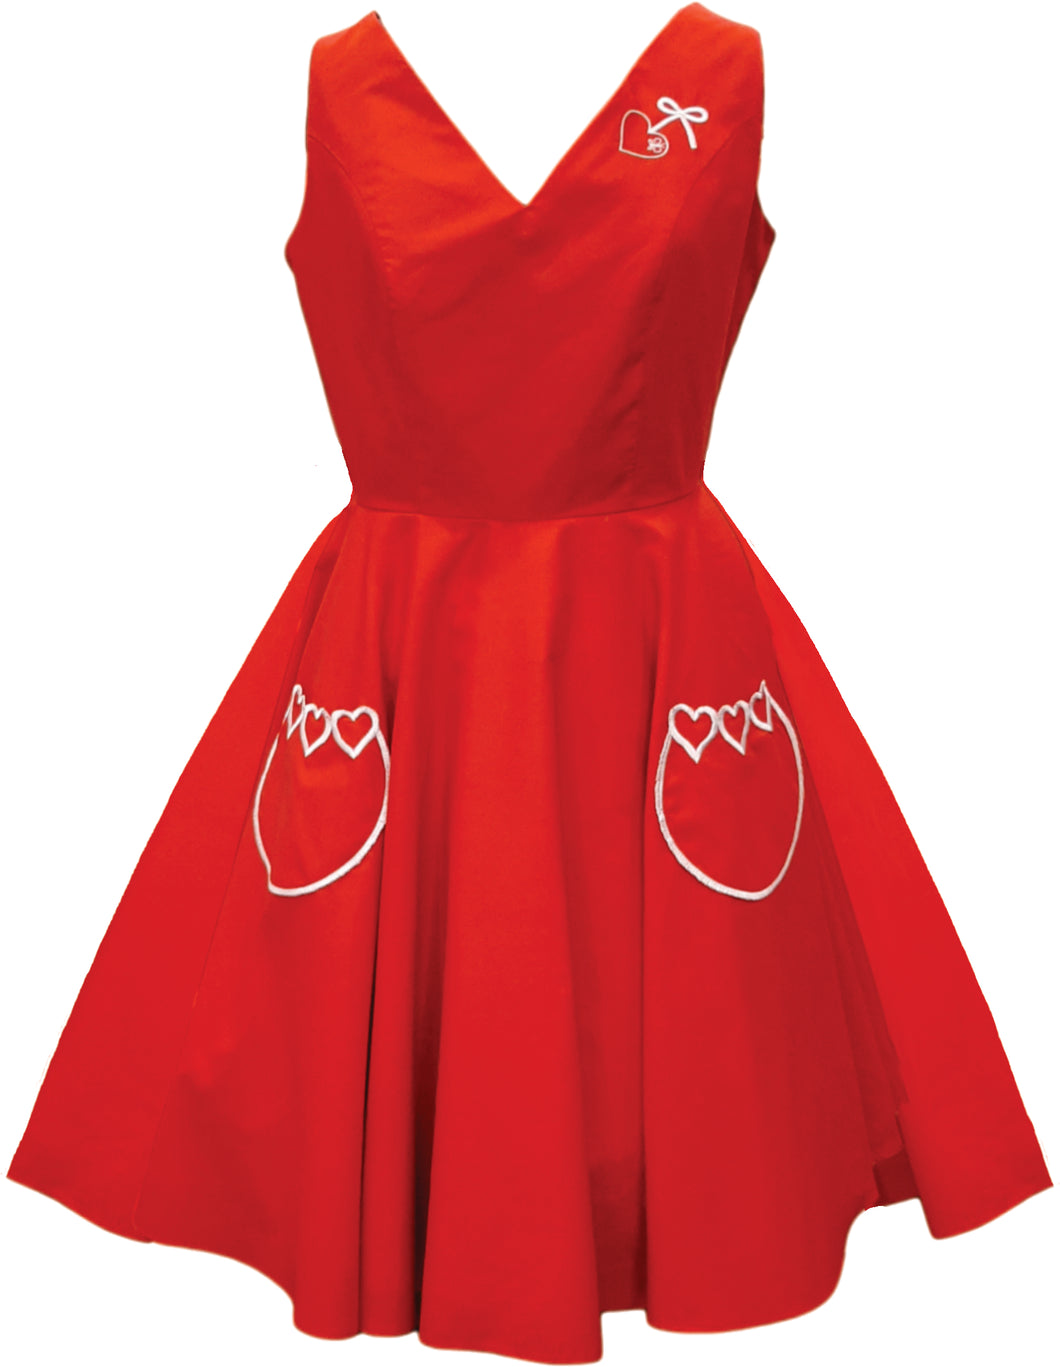 Love Heart Dress with V Neckline and Heart Pockets